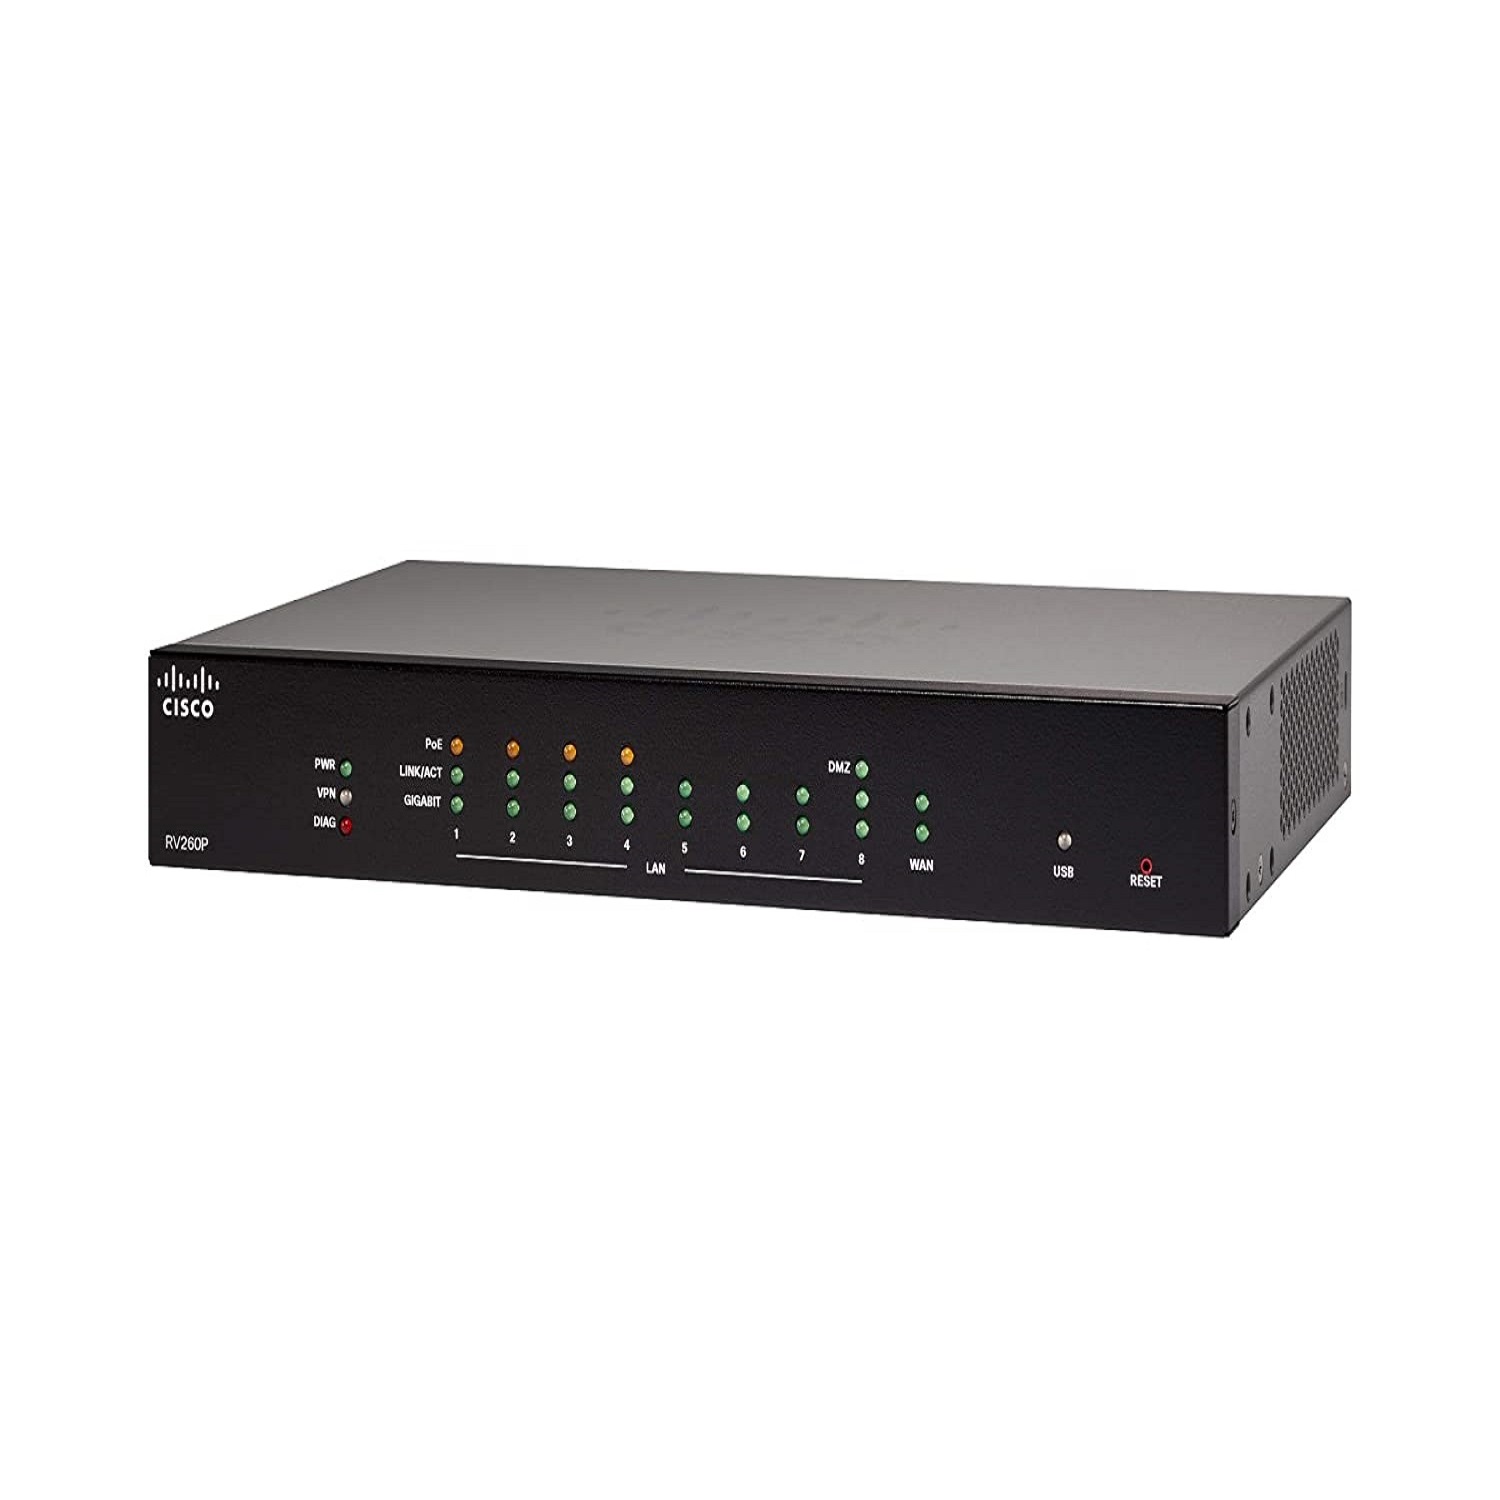 Cisco RV260W VPN Router